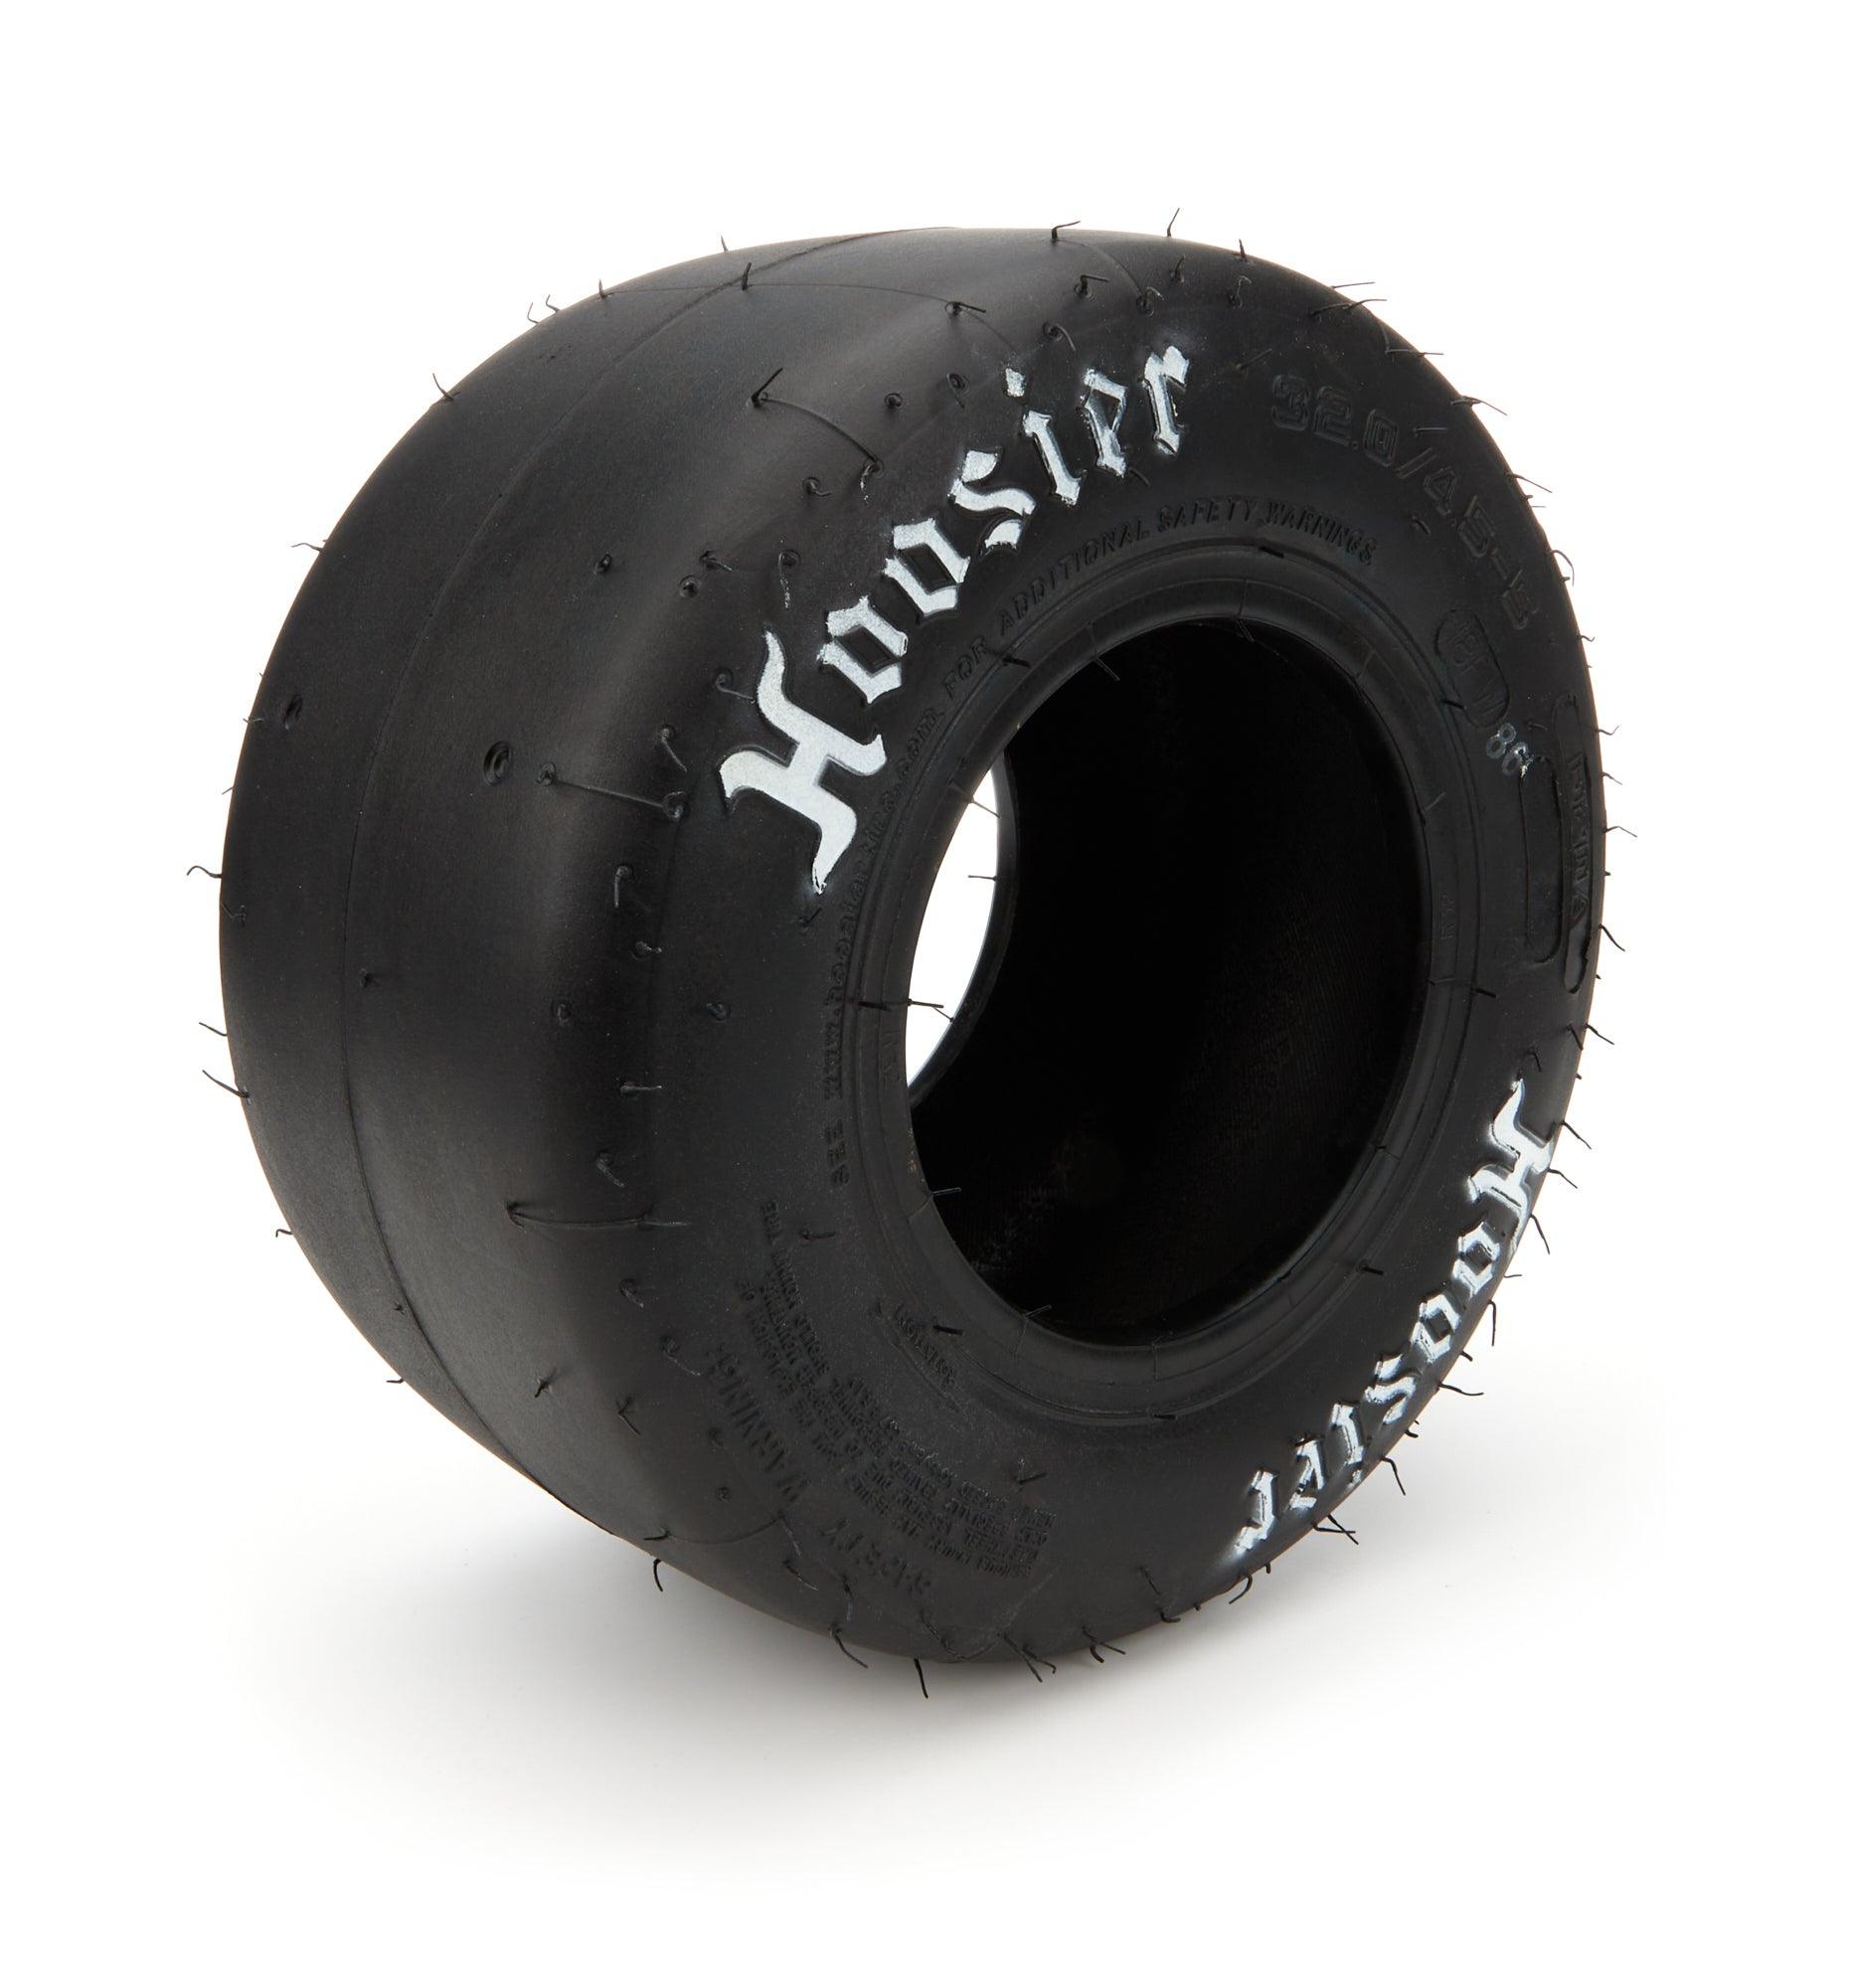 Quarter Midget Tire 32.0/4.5-5 - Burlile Performance Products